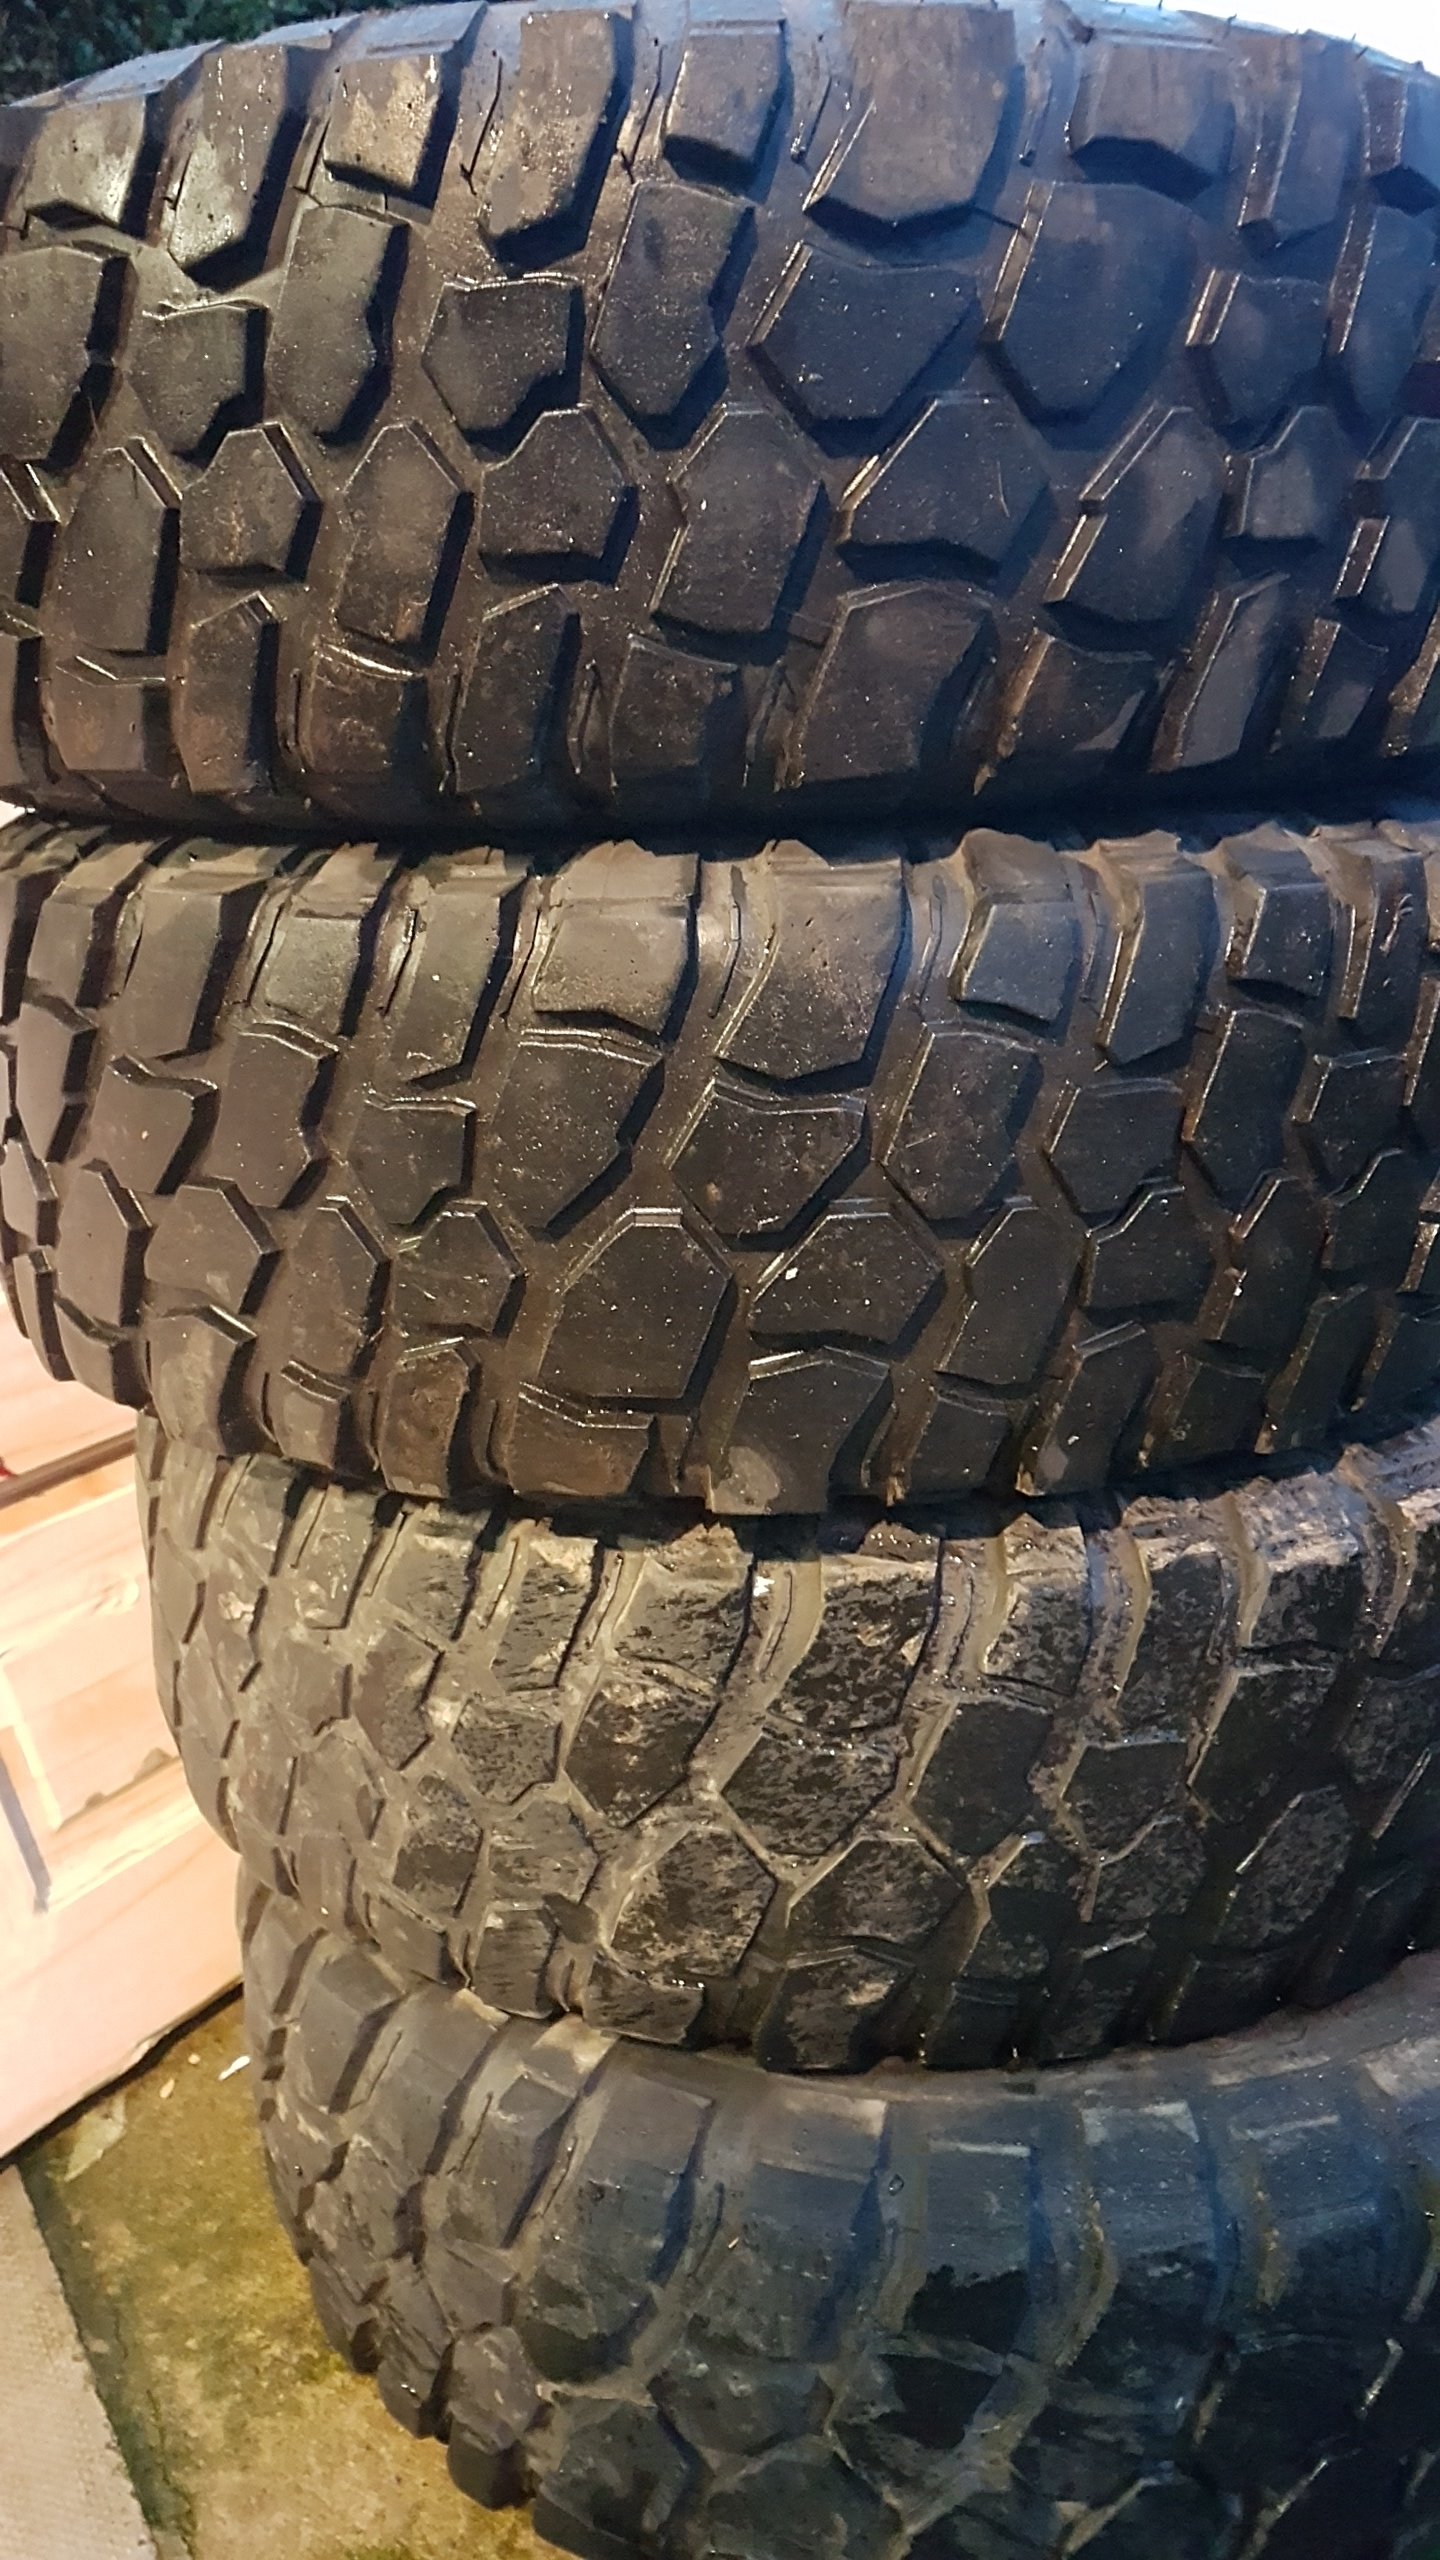 4x4 tyres